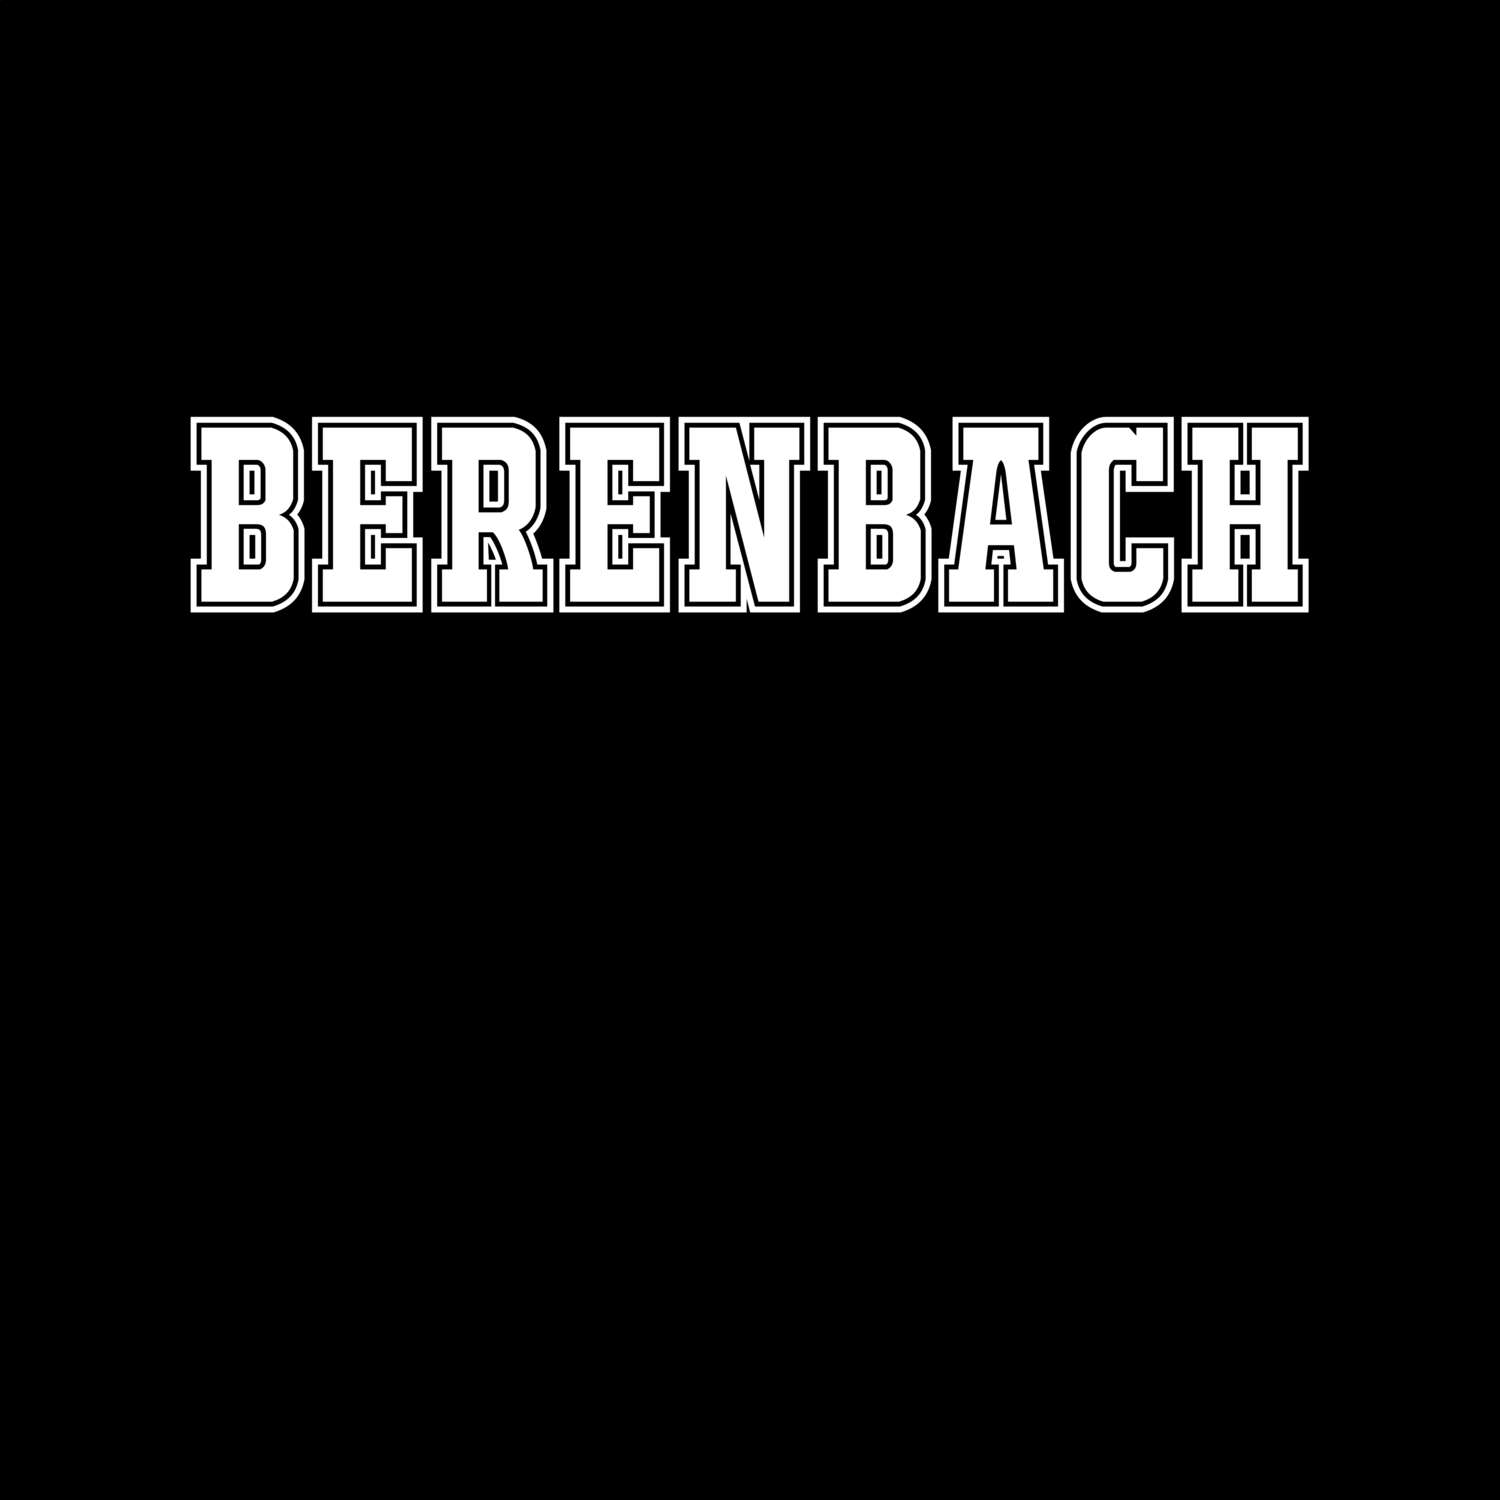 Berenbach T-Shirt »Classic«